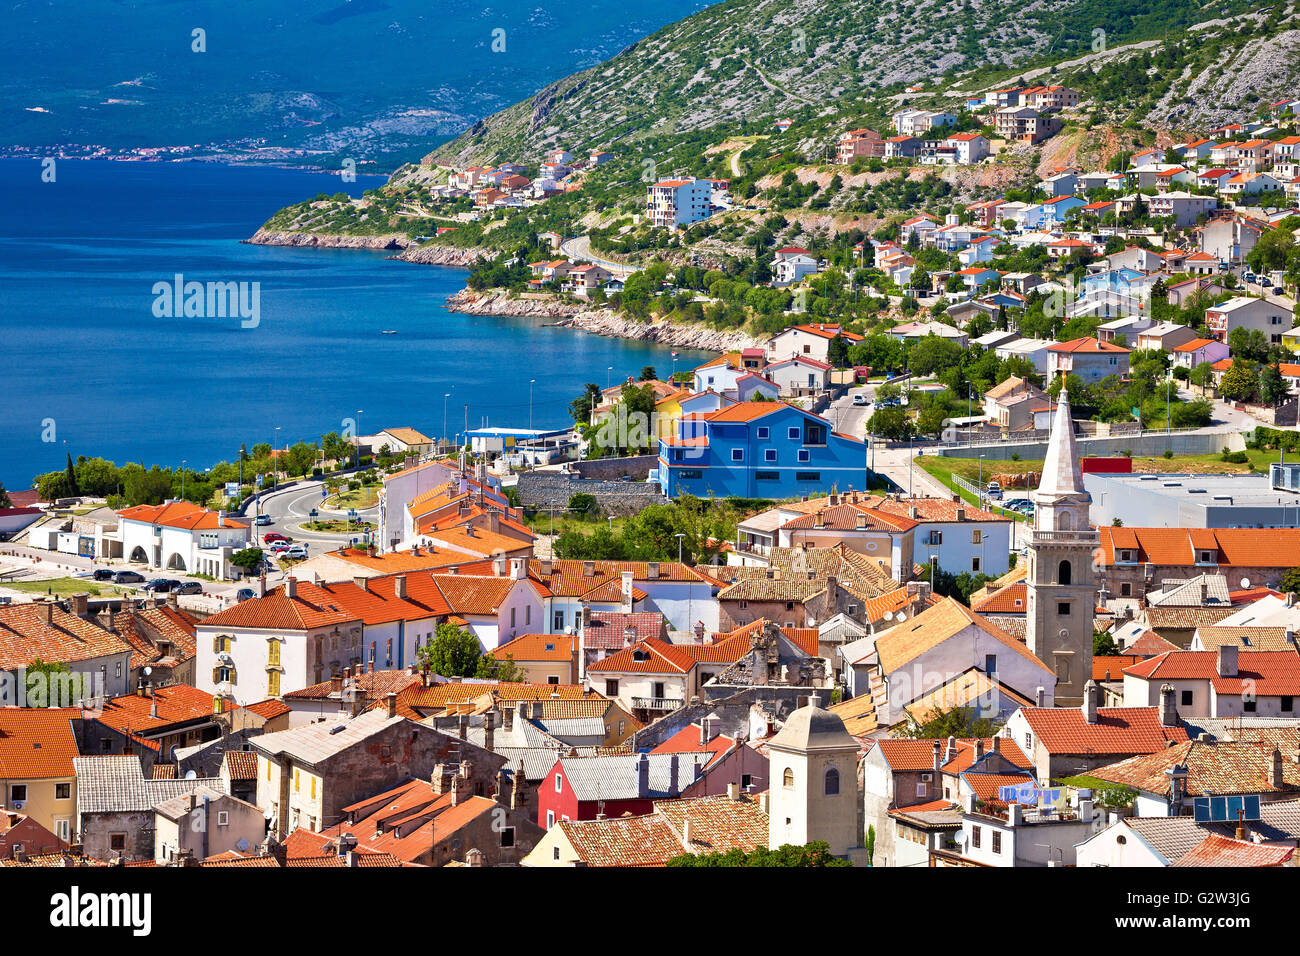 Town of Senj architecture and coast, Primorje region of Croatia Stock Photo